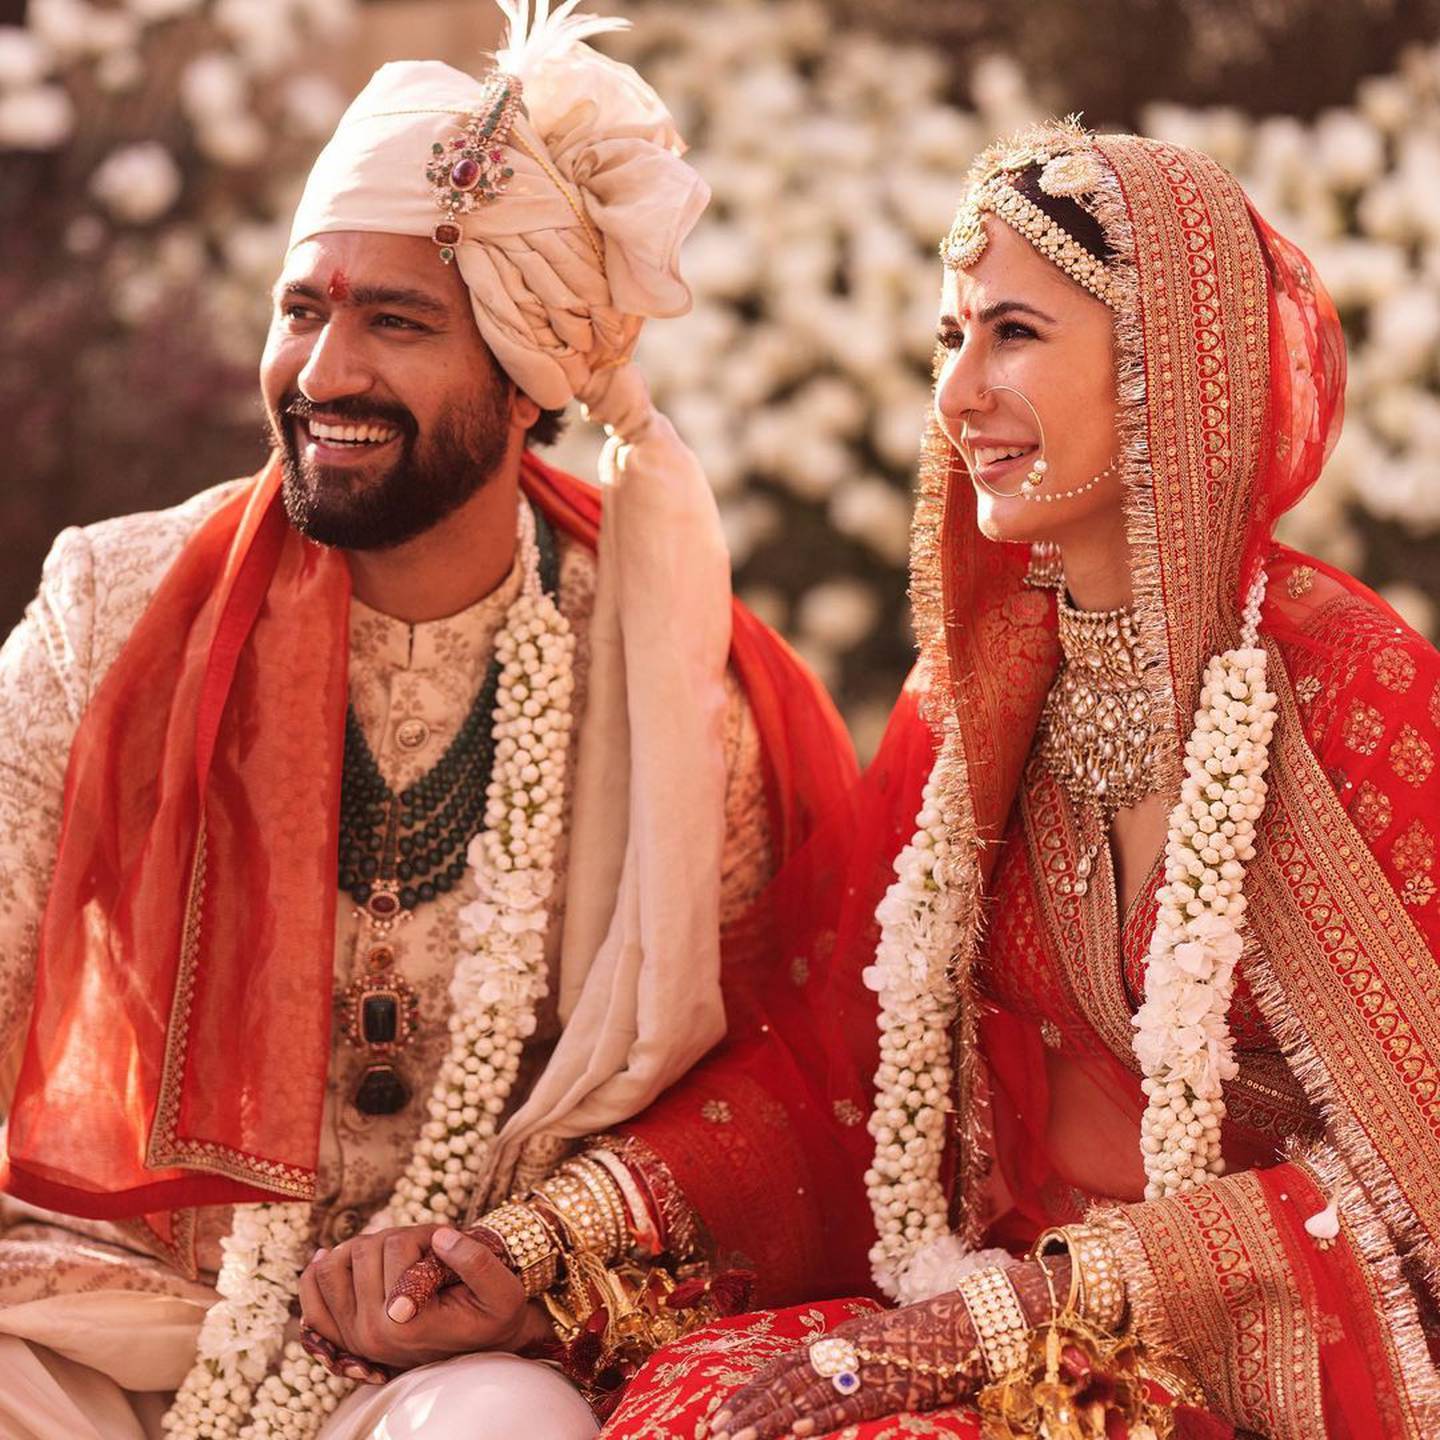 Bollywood stars Vicky Kaushal and Katrina Kaif shared images from their wedding on their social media accounts. Photo: Instagram / katrinakaif